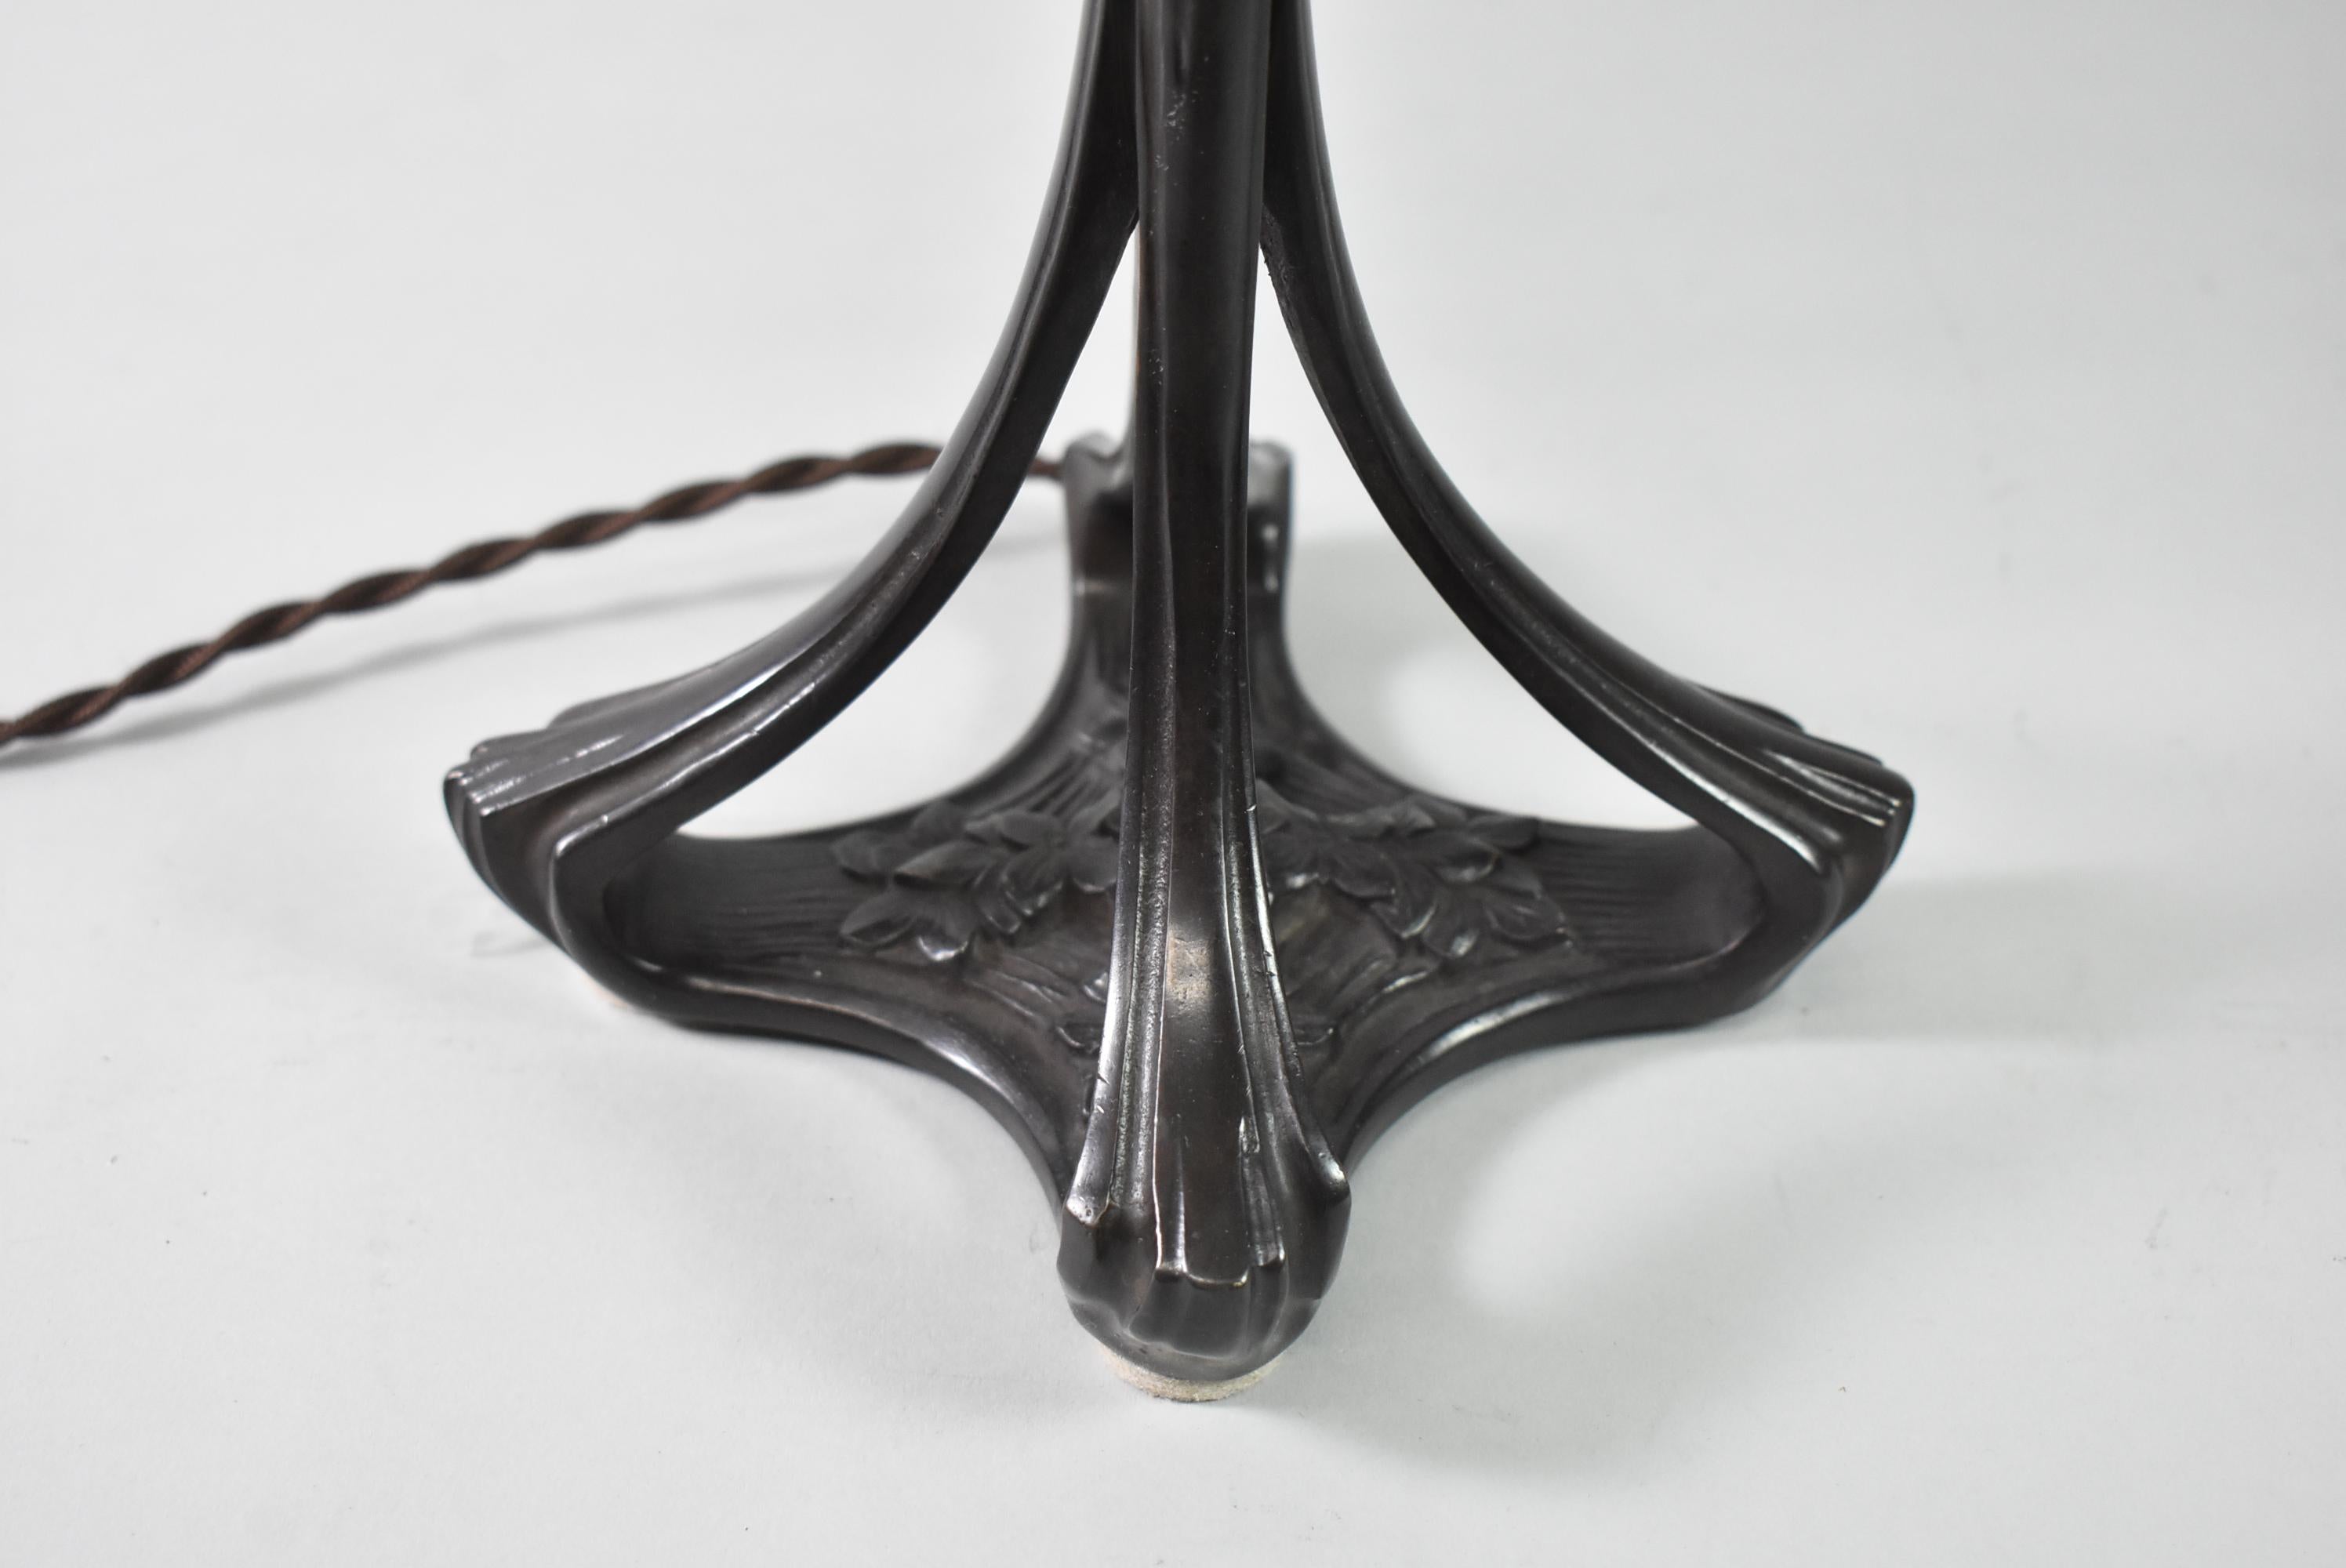 Art Nouveau Table Lamp with Daum Nancy Shade, Circa 1900 France For Sale 2